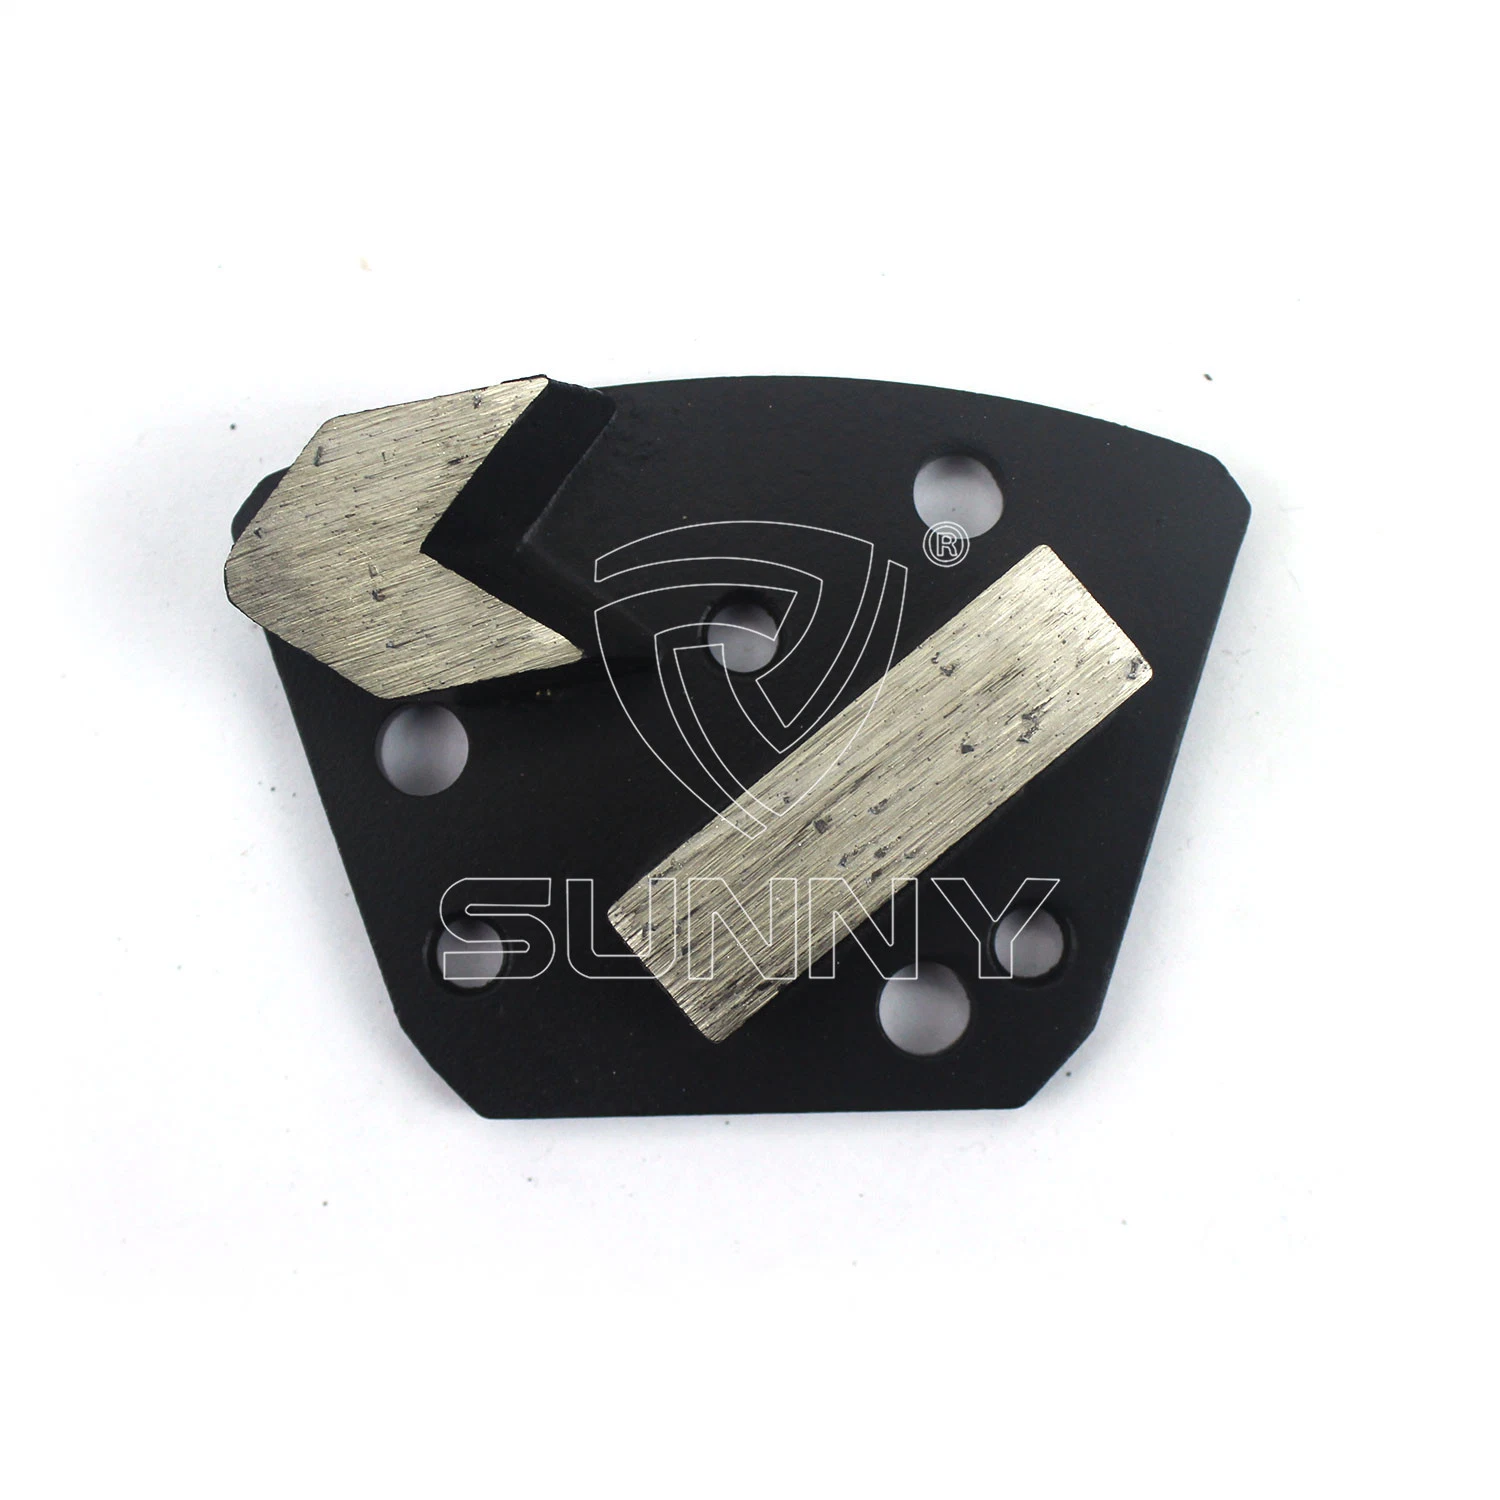 Blastrac Diamond Zigzag and Arrow Segment Tools Abrasive Disc Concrete Grinding Plates